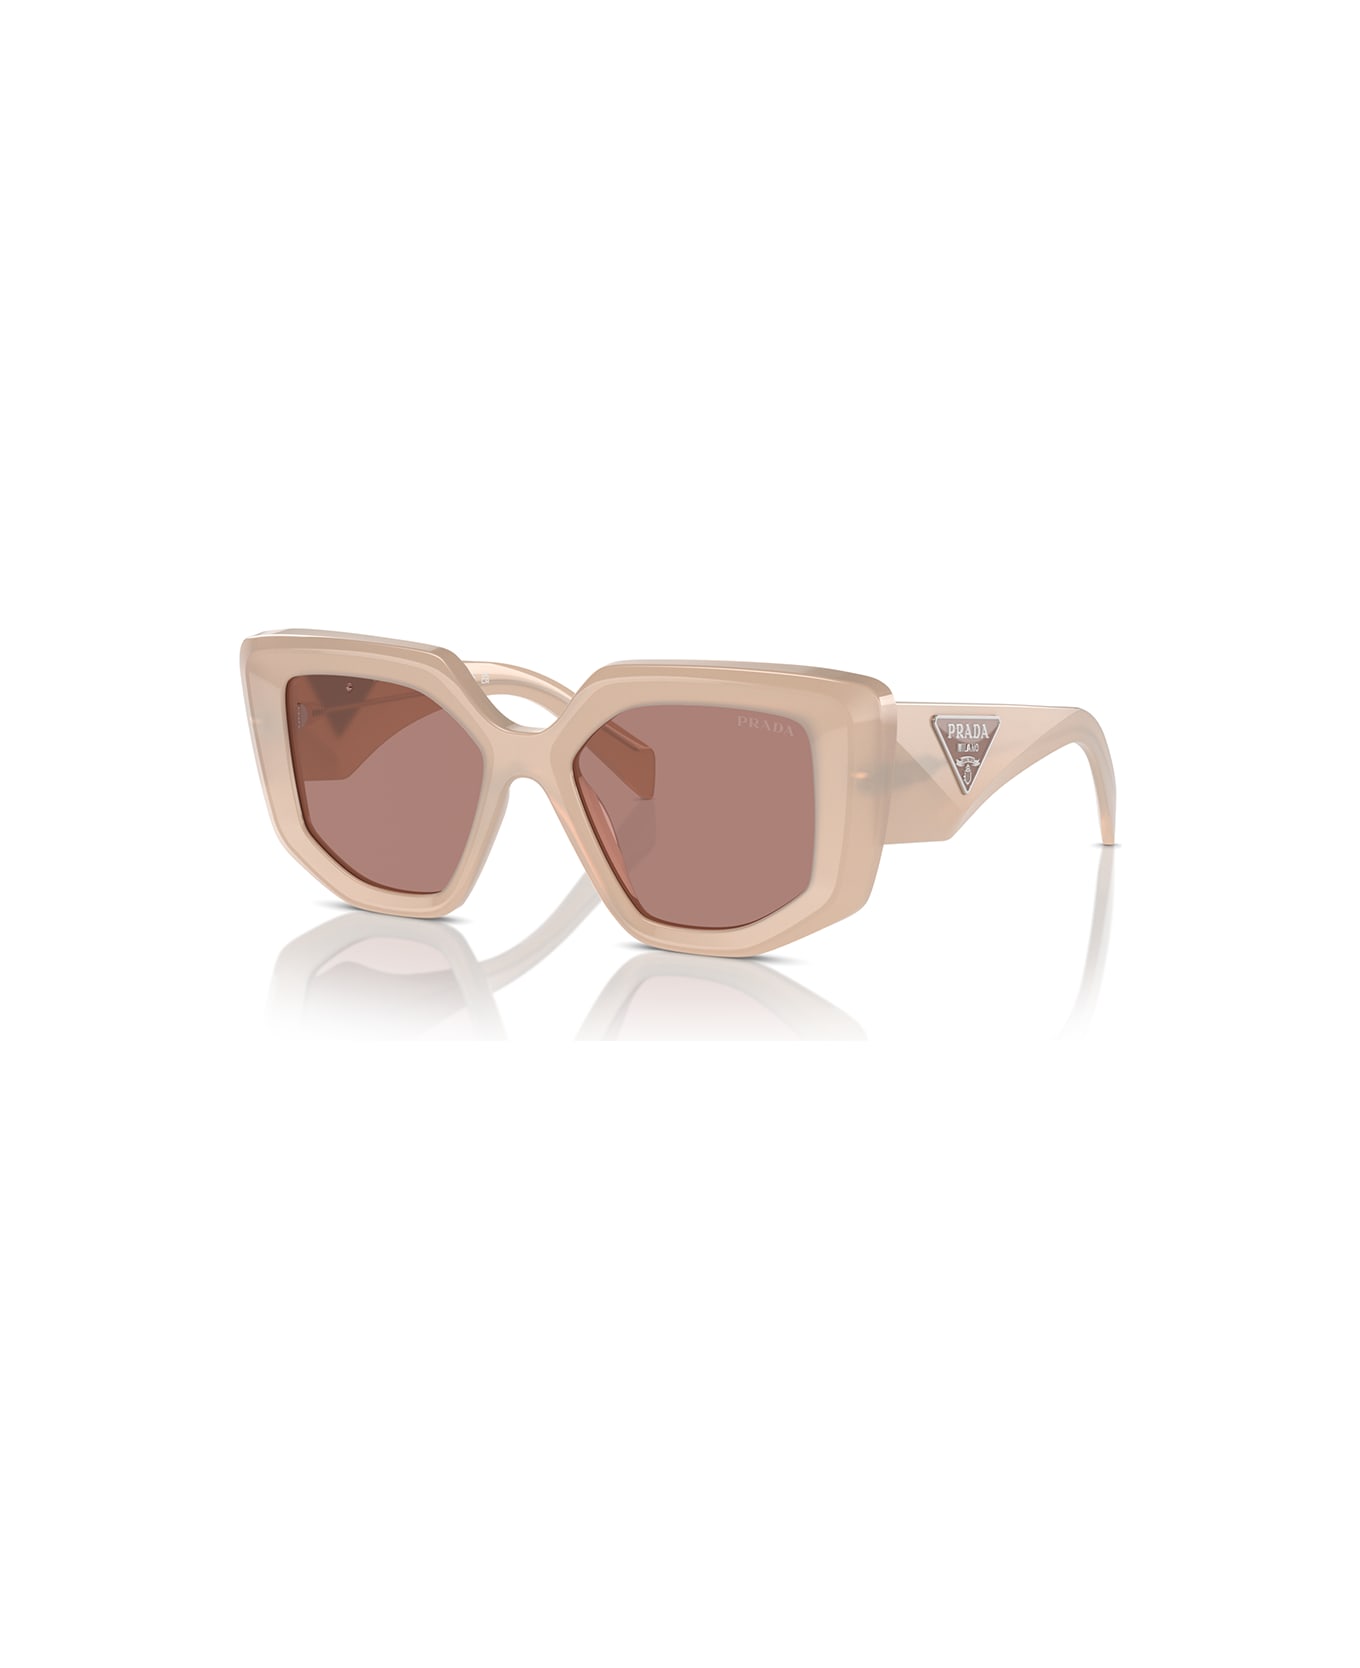 Prada Eyewear Sunglasses - Cipria/Marrone chiaro